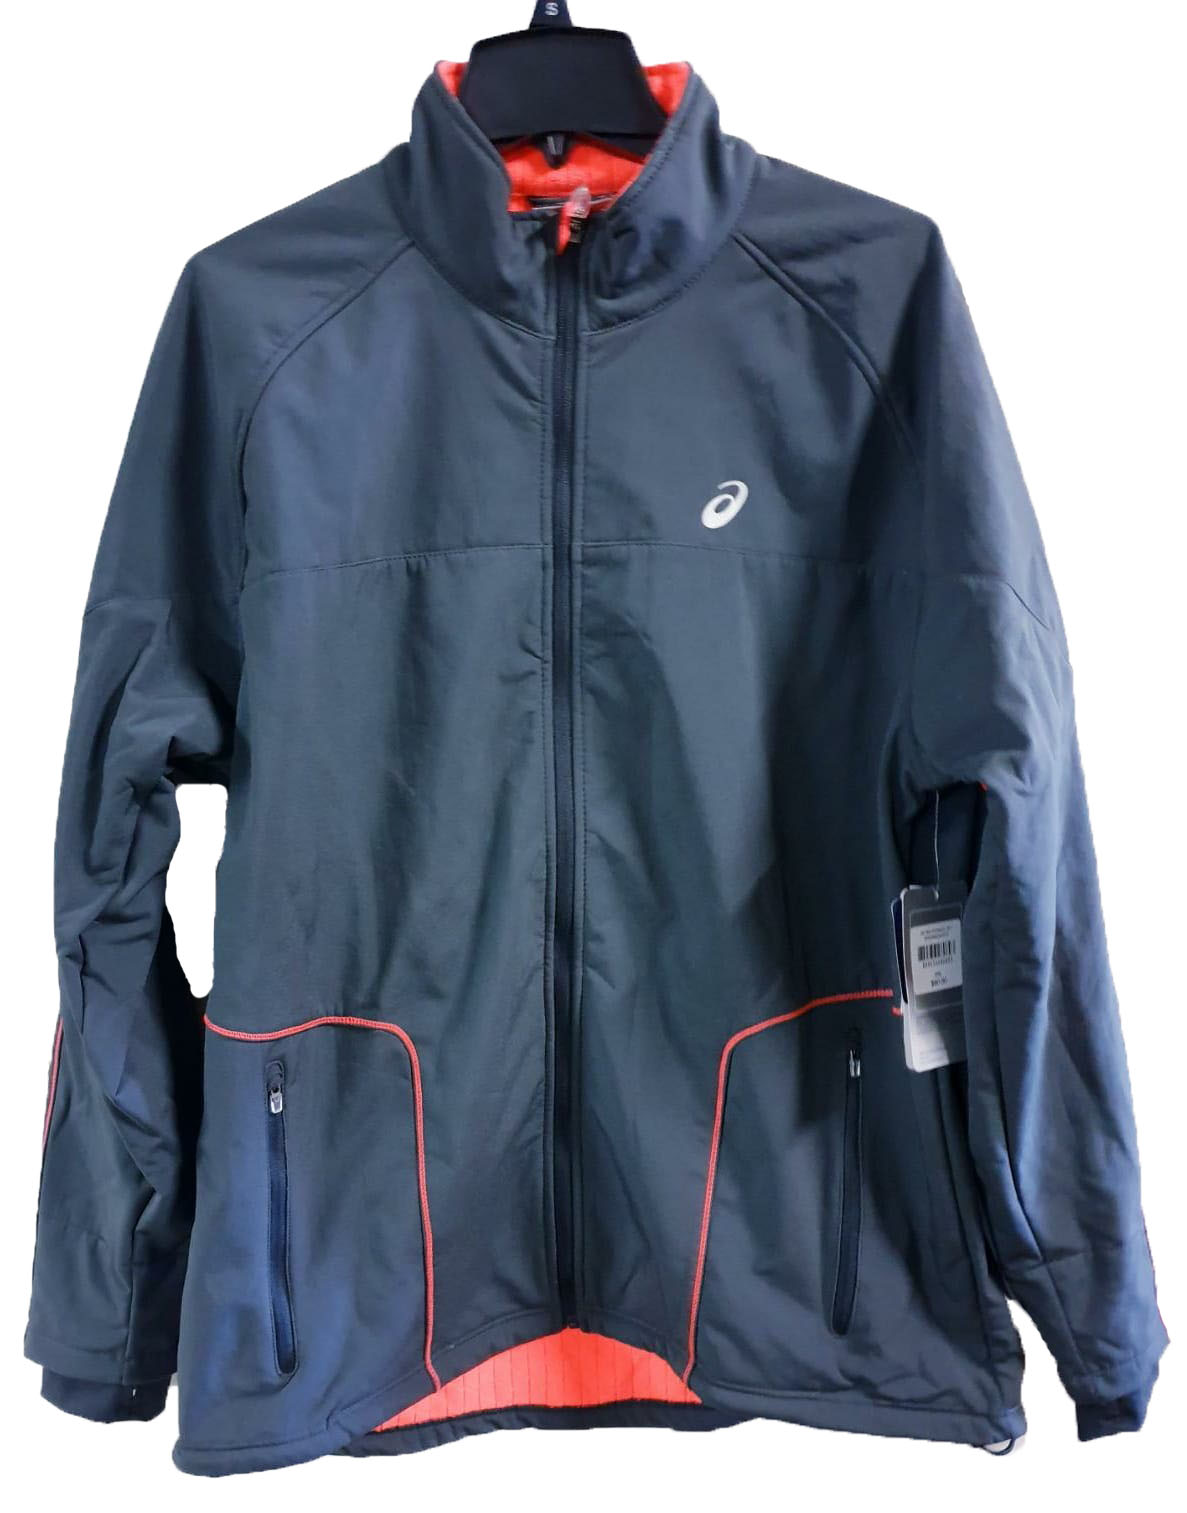 Asics Men's Ultra Waterproof Running Jacket with Reflector Strip, Dark Grey, Medium - image 2 of 6